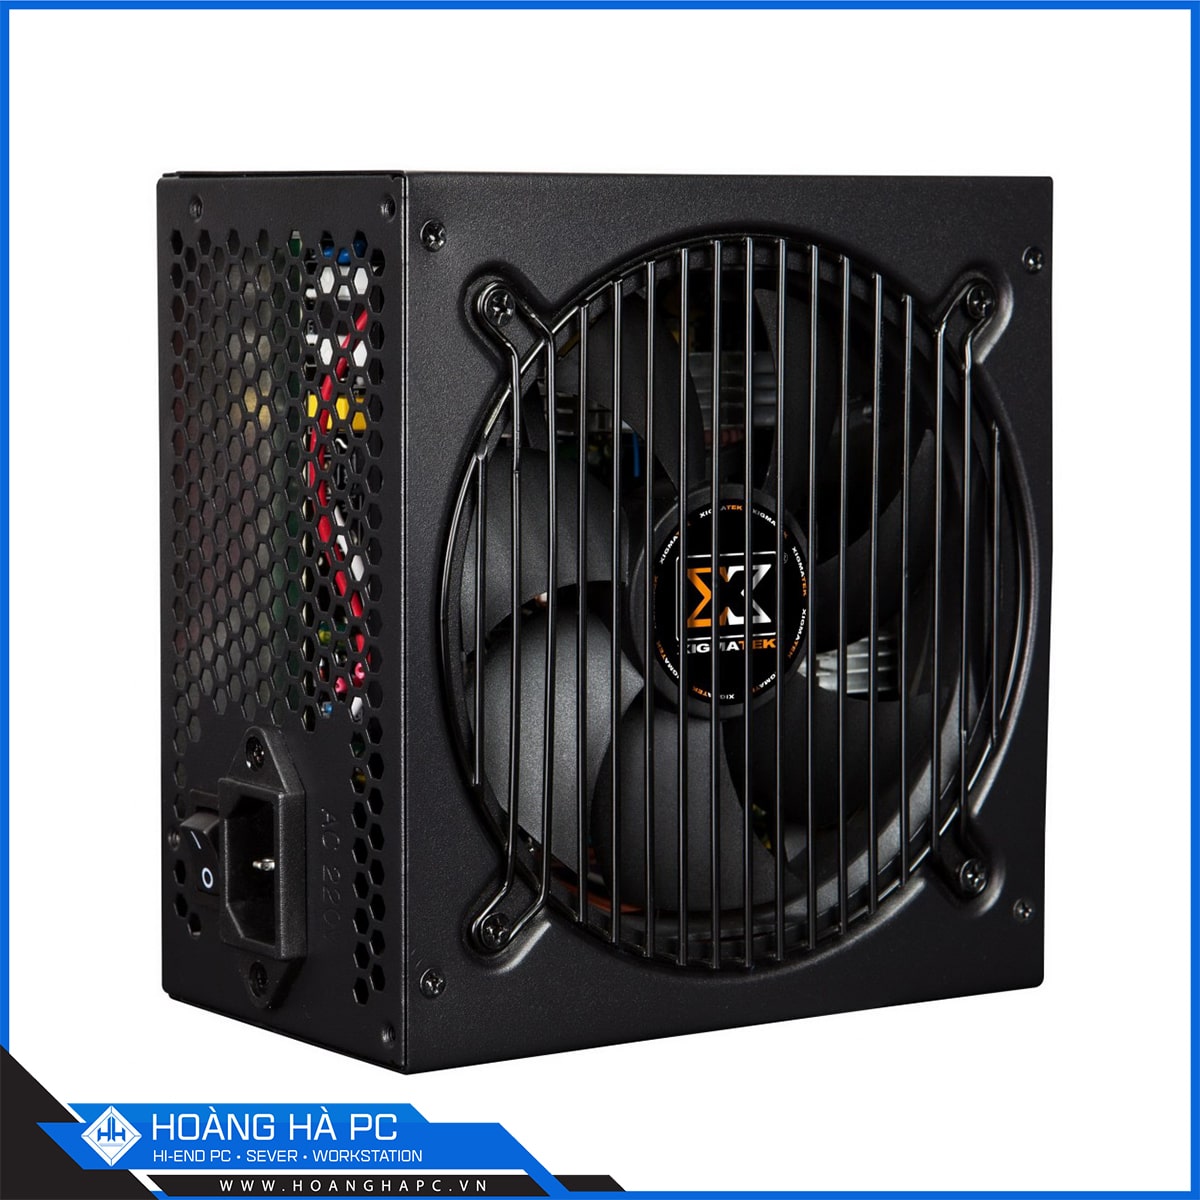 Nguồn Xigmatek X-POWER II 500 450W (80 Plus/Non Modular)